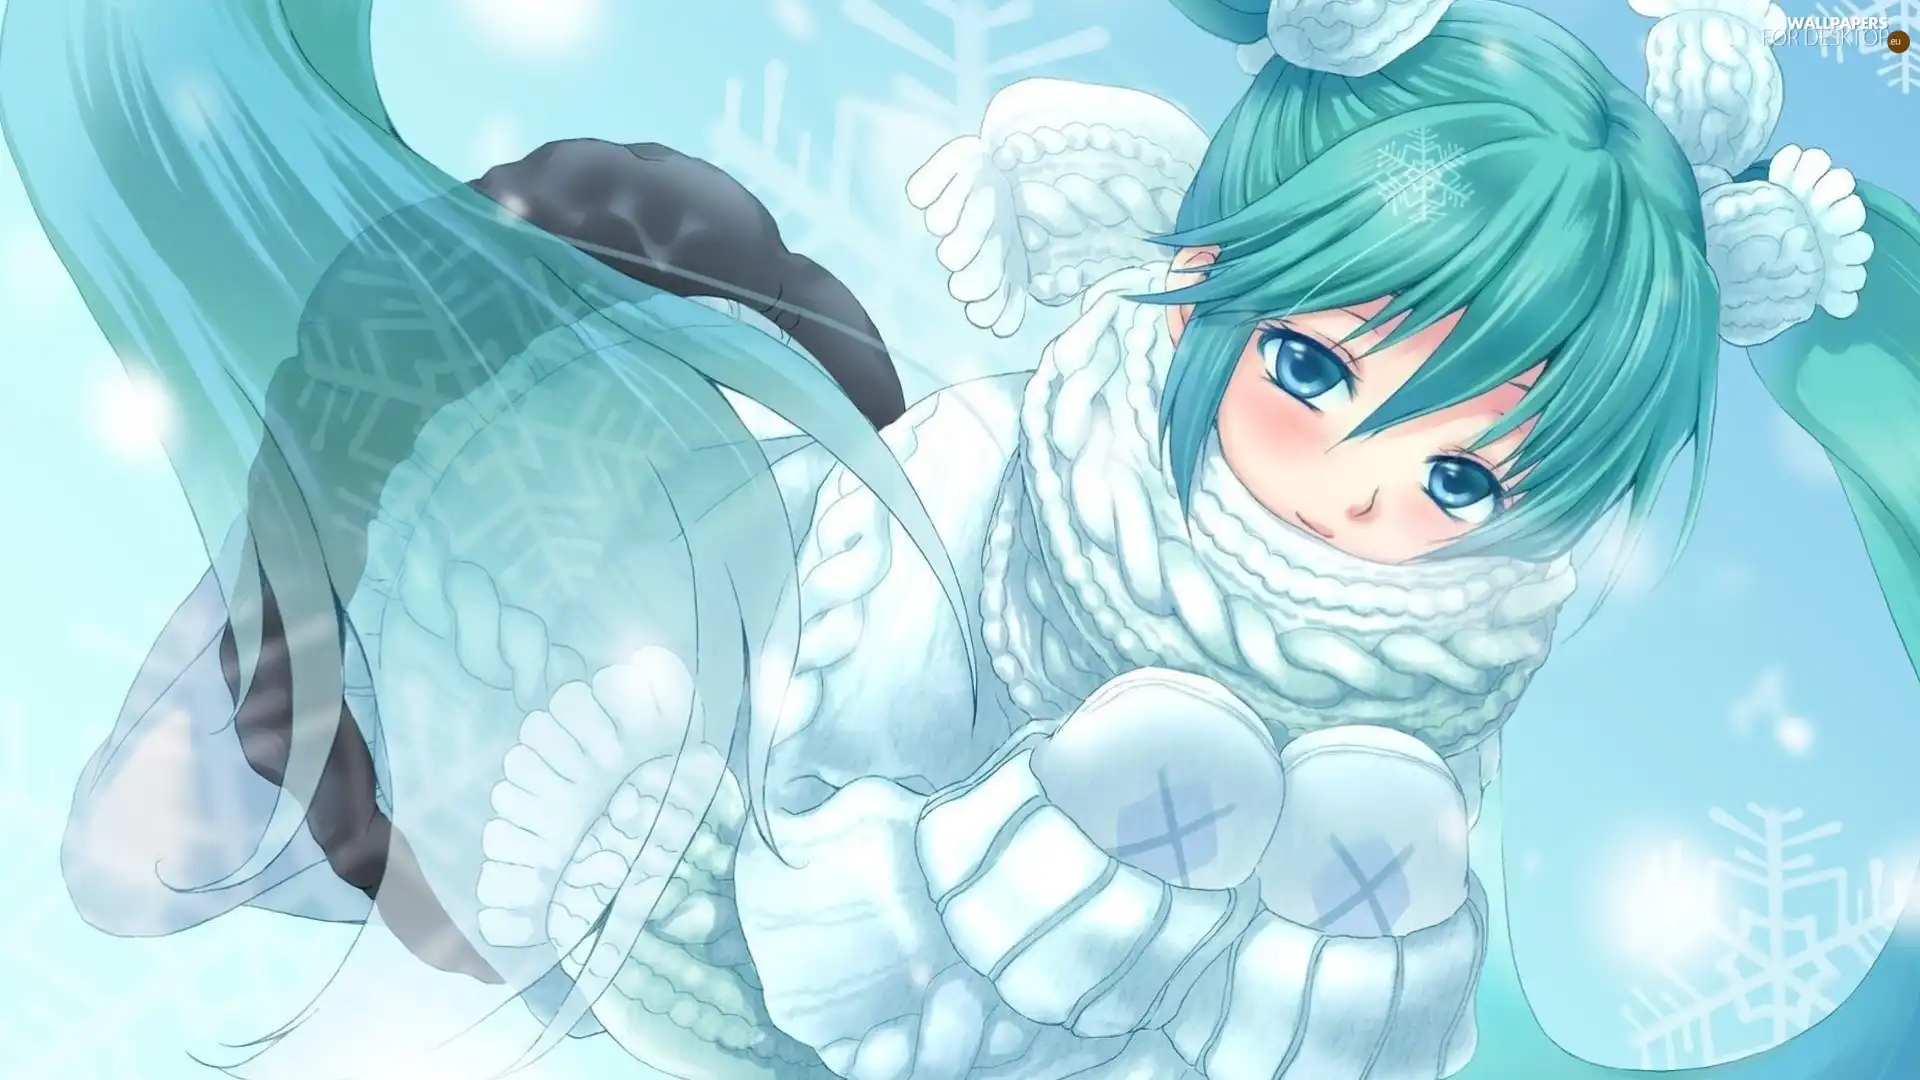 Anime, Vocaloid, winter, Manga, girl